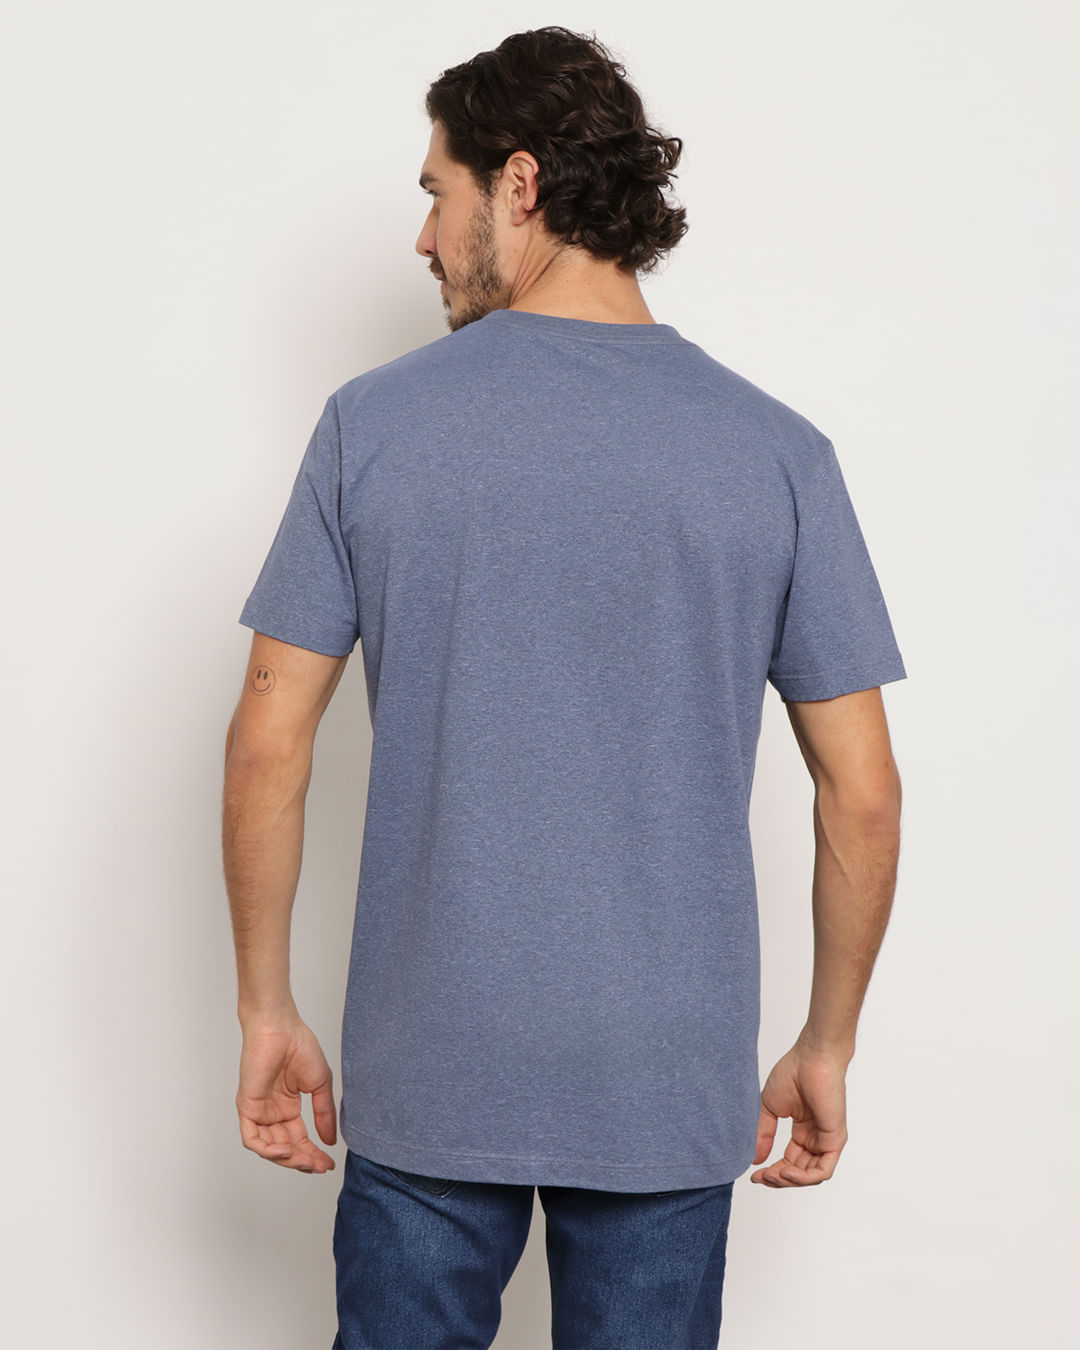 Camiseta-Tt600-Pretoazul-Pgg---Azul-Medio